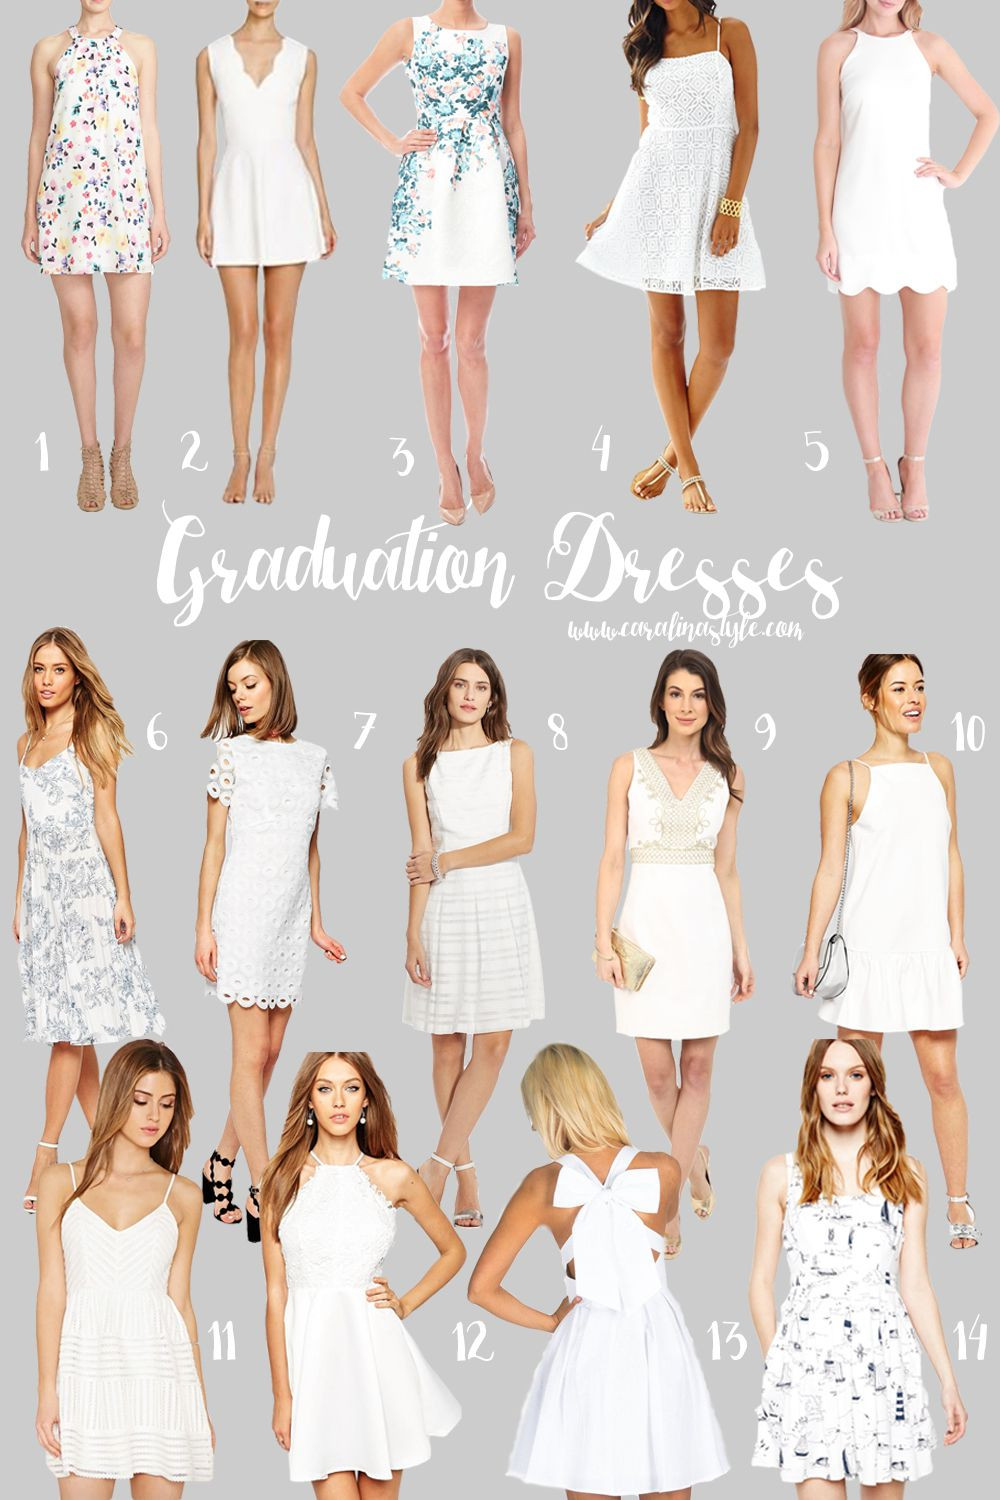 Graduation Party Dress Ideas
 Caralina Style Graduation Dresses in 2019